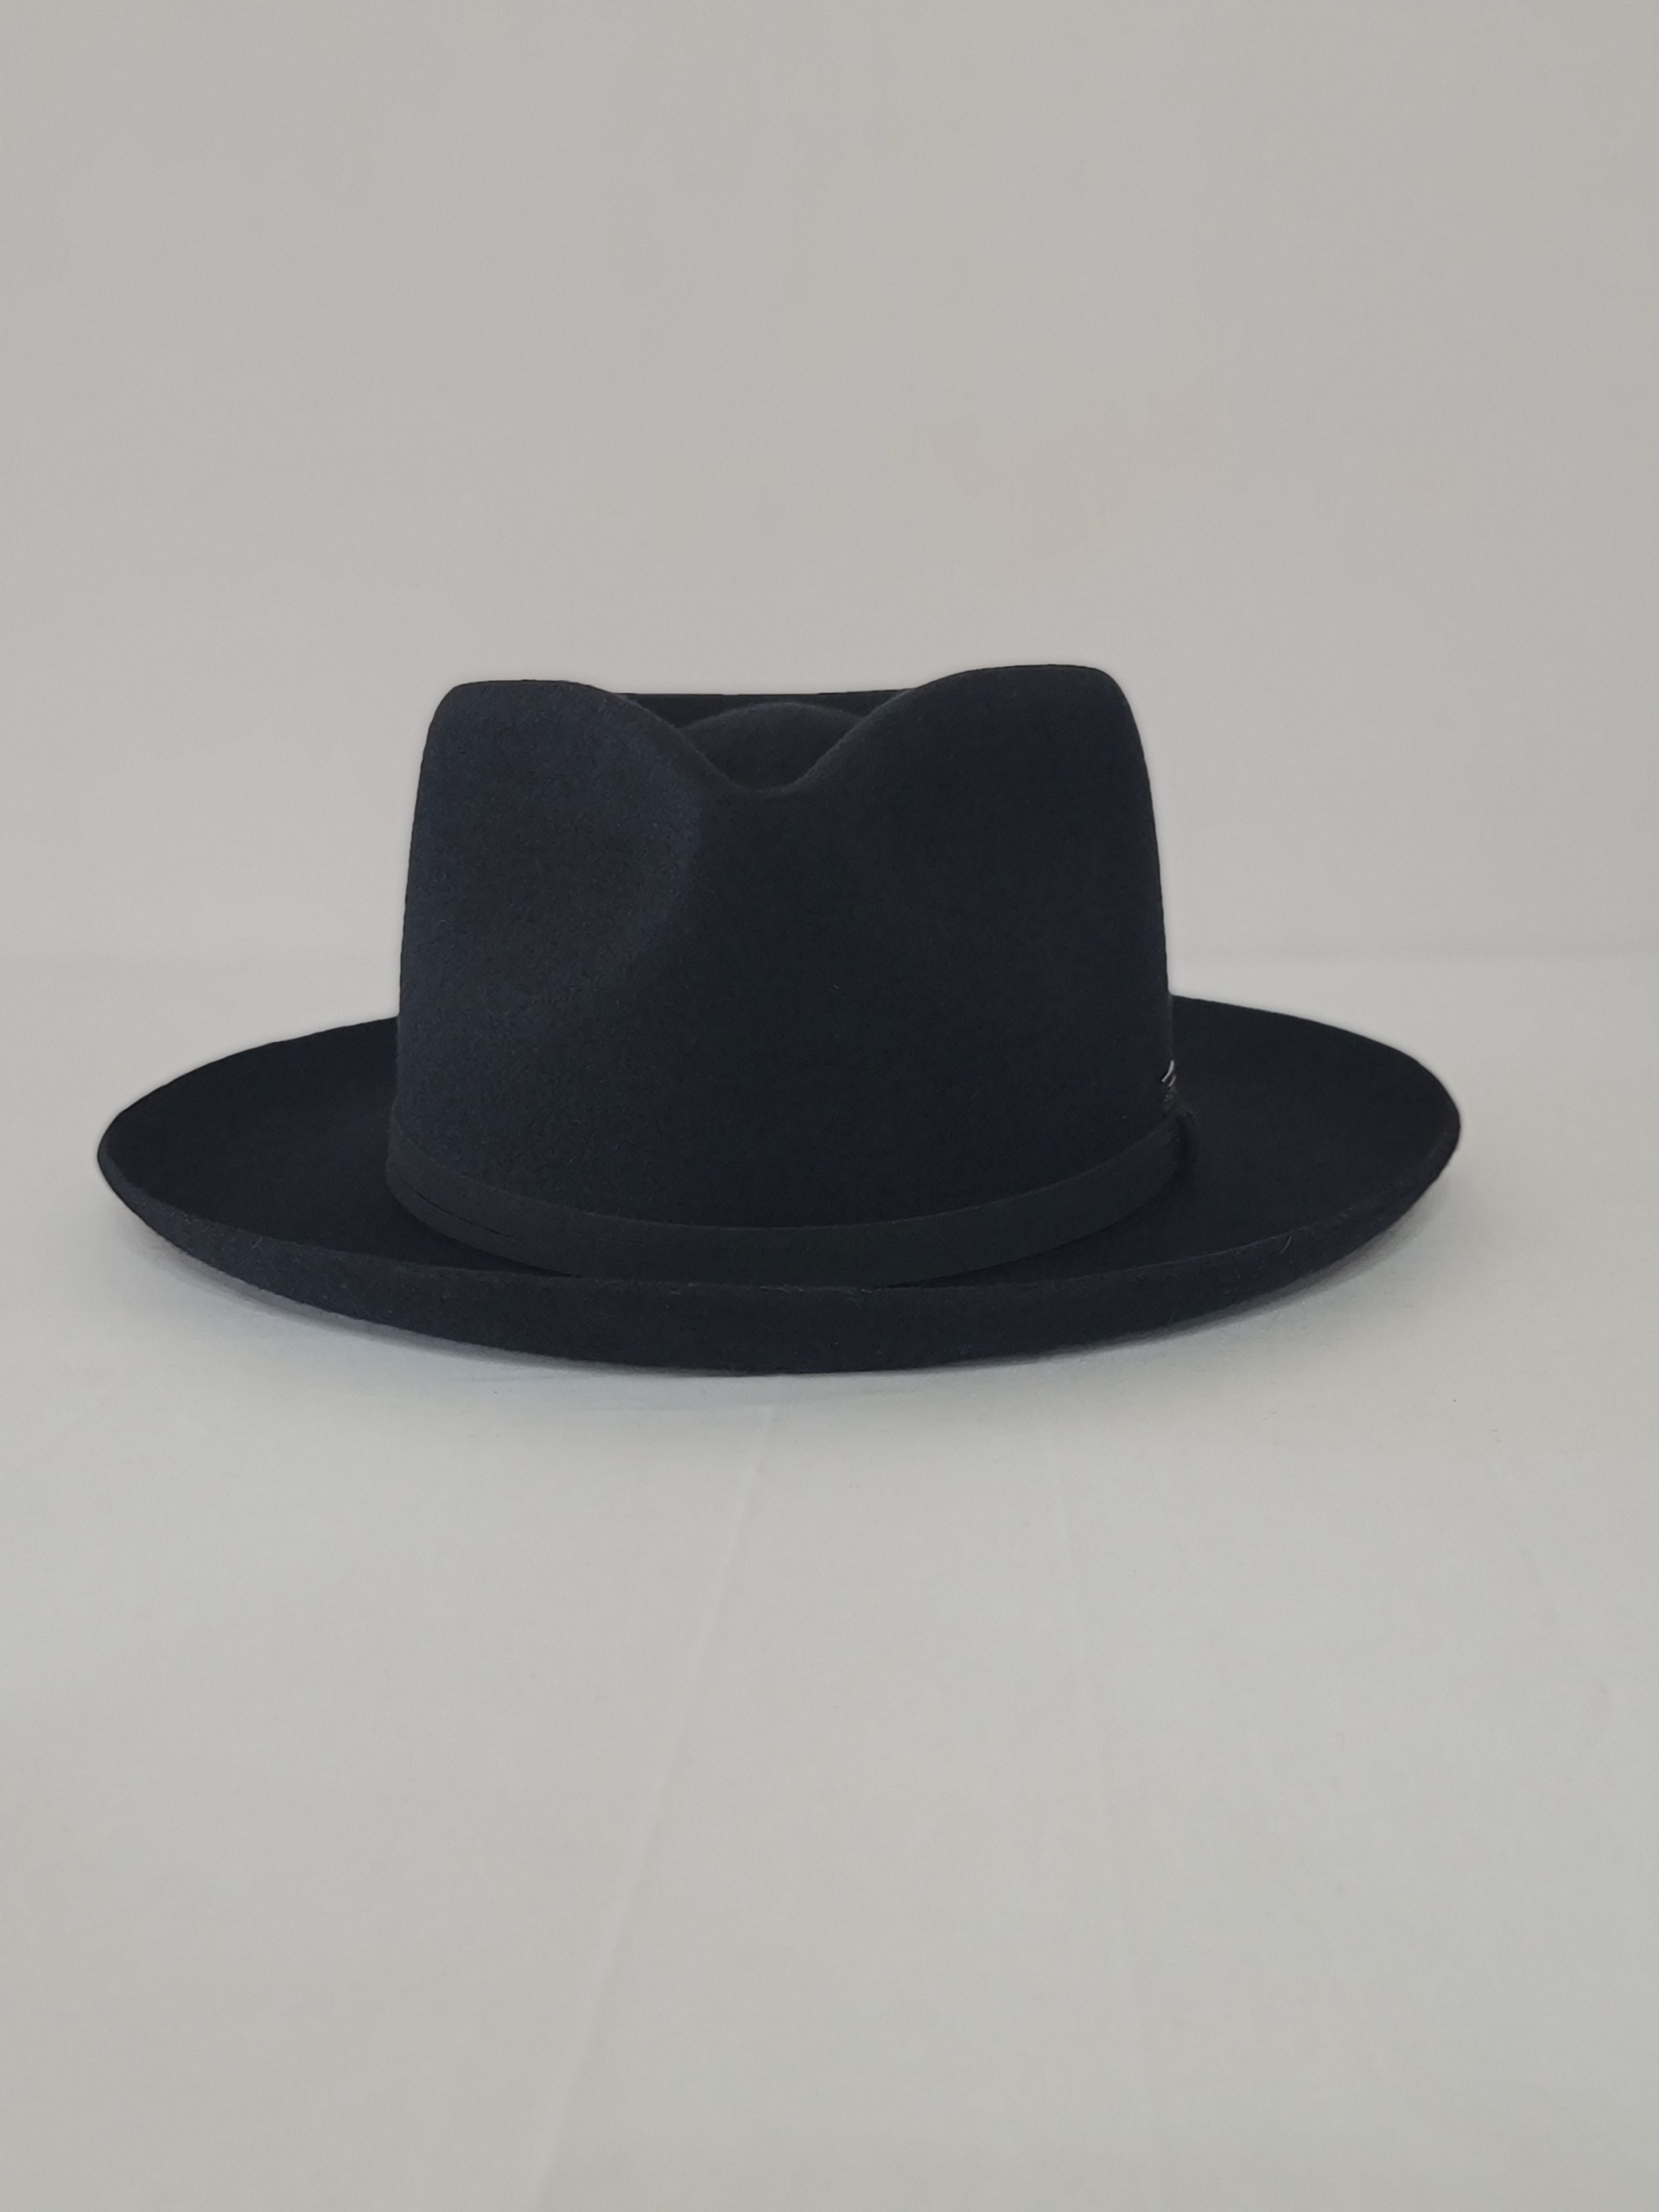 Bruno Capelo – Ivy League – The Wright Hat Company